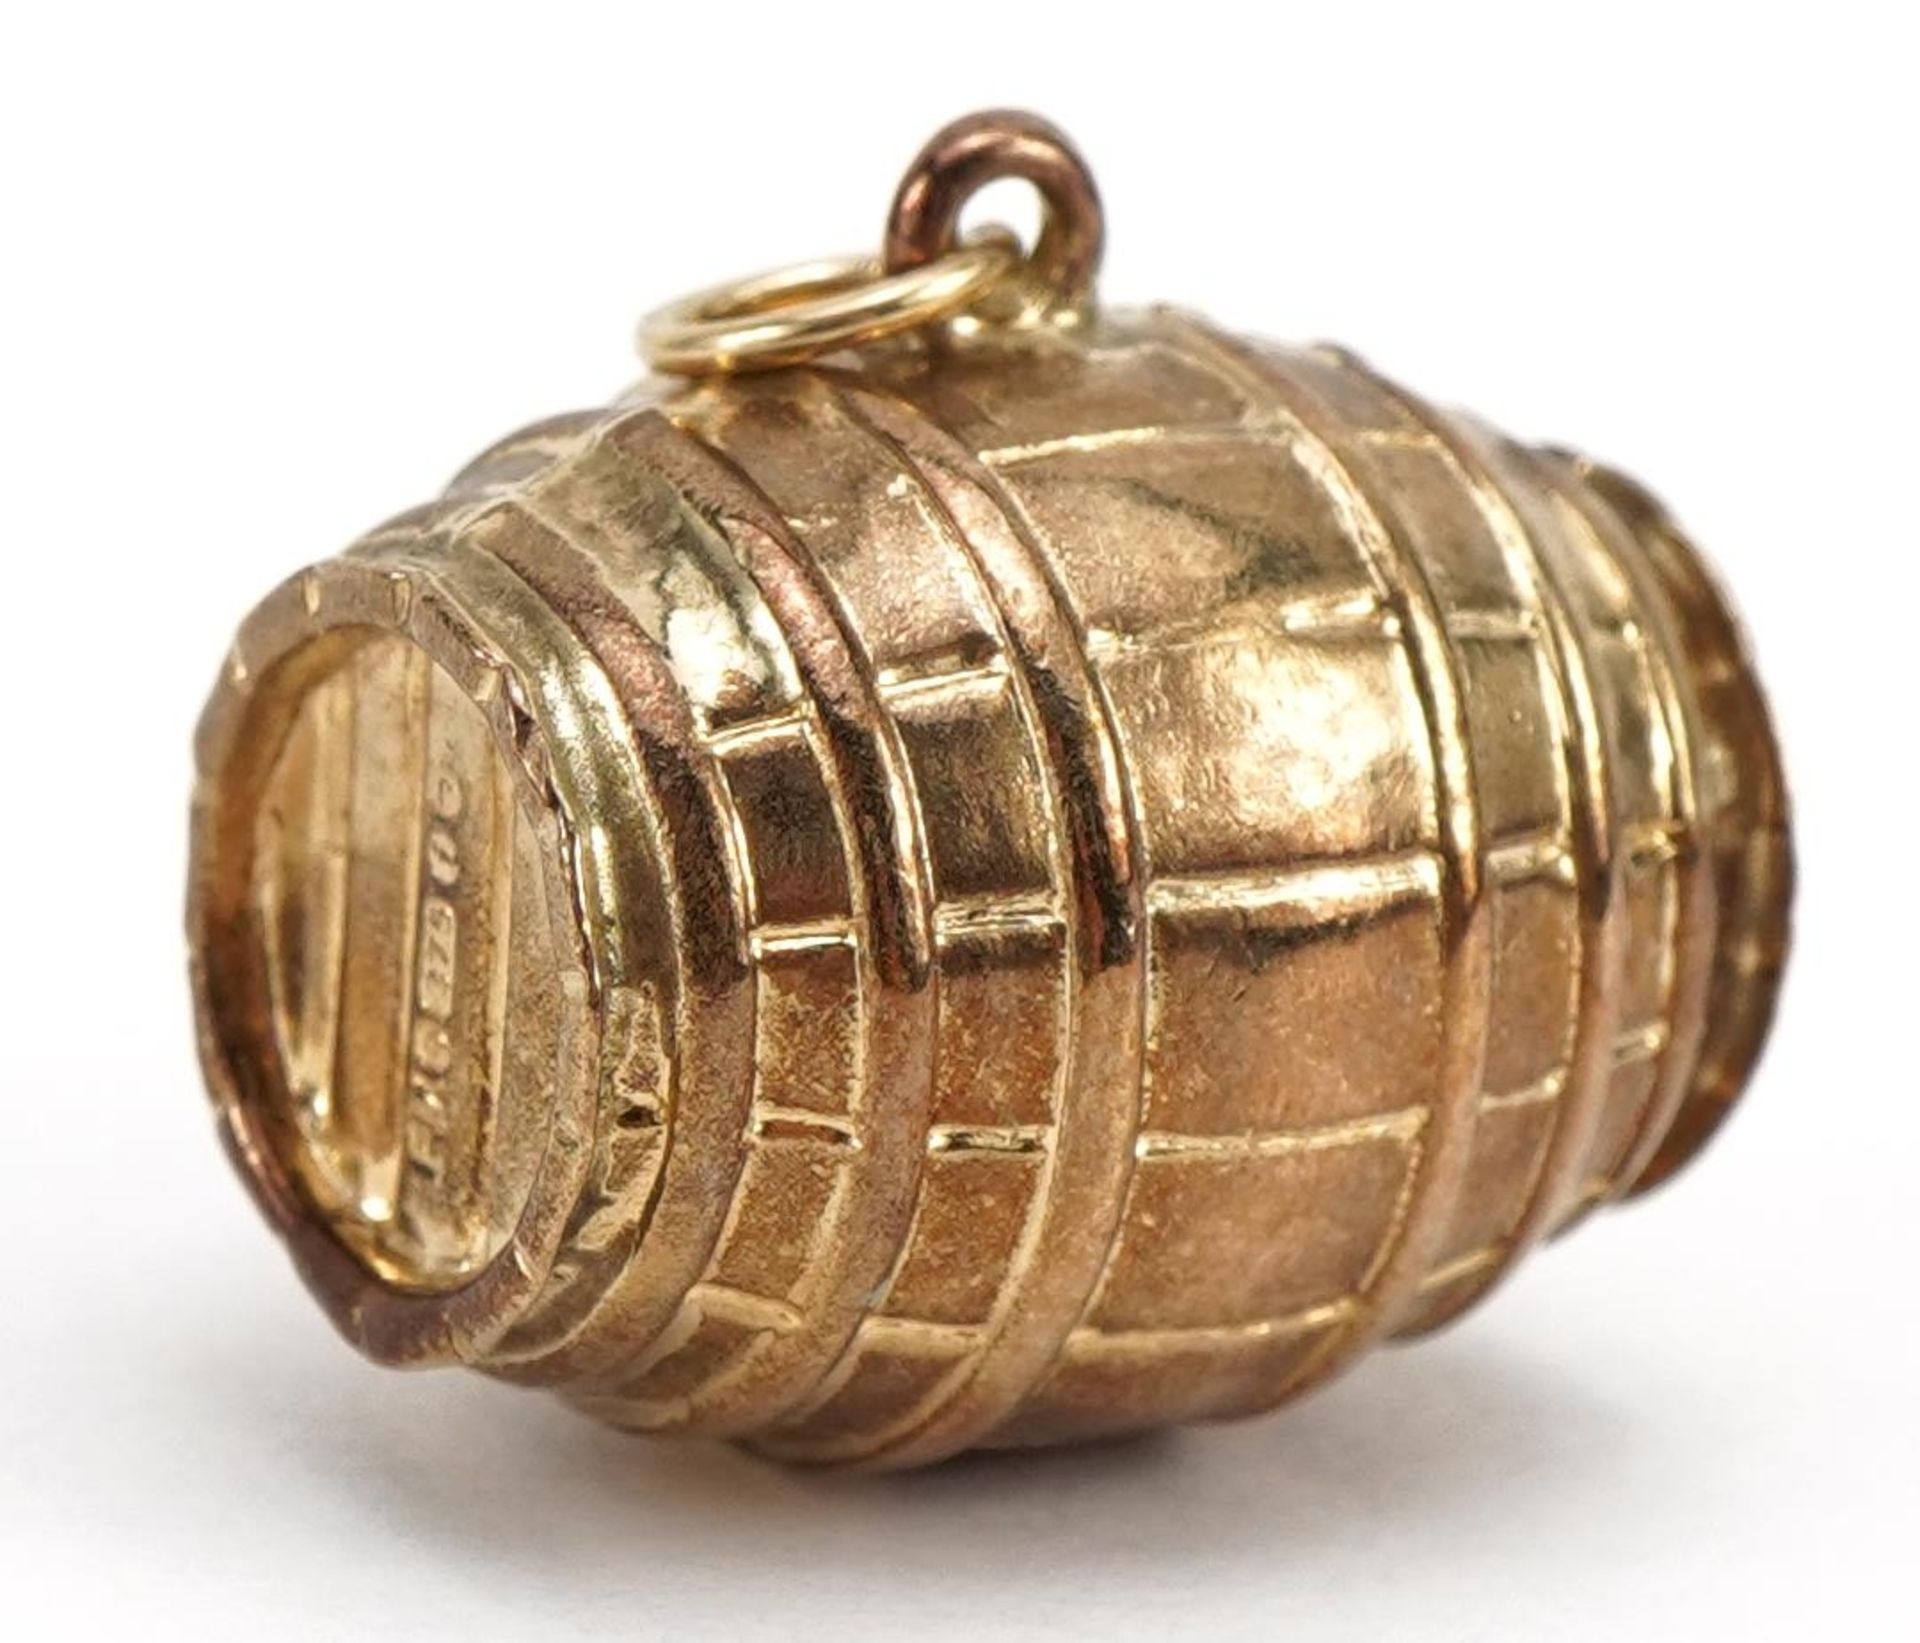 9ct gold barrel charm, 1.7cm wide, 1.9g - Image 2 of 3